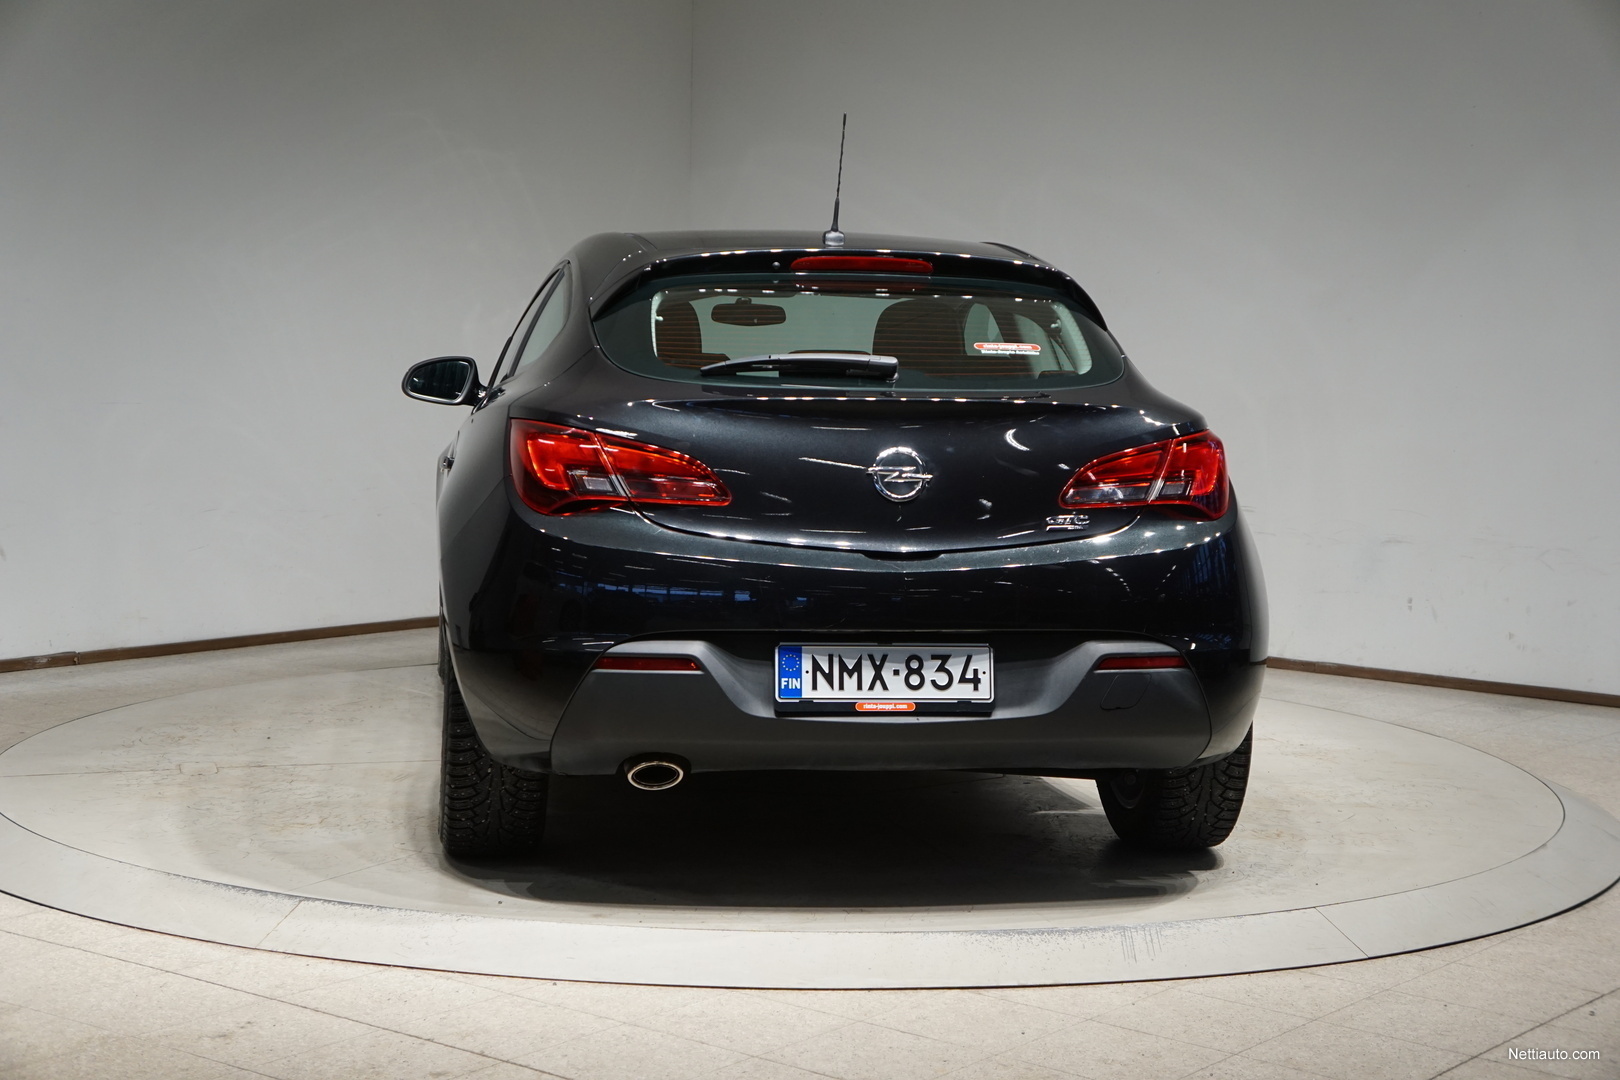 File:Opel Astra J 1.4 ecoFLEX Edition rear 20100725.jpg - Wikimedia Commons